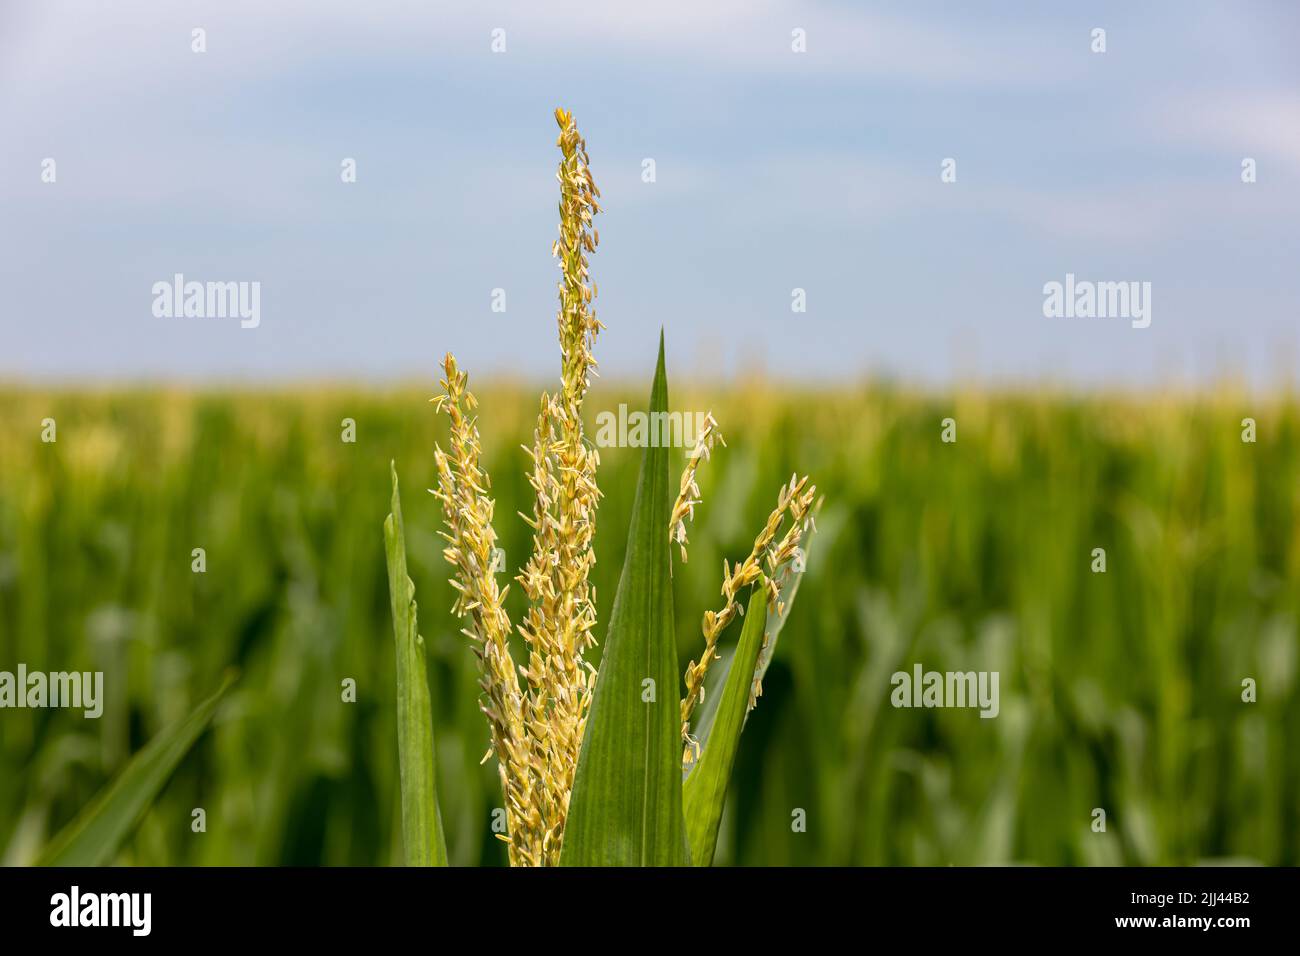 Corn tassel on cornstalk during summer growing season. Farming, agriculture, and ethanol concept. Stock Photo